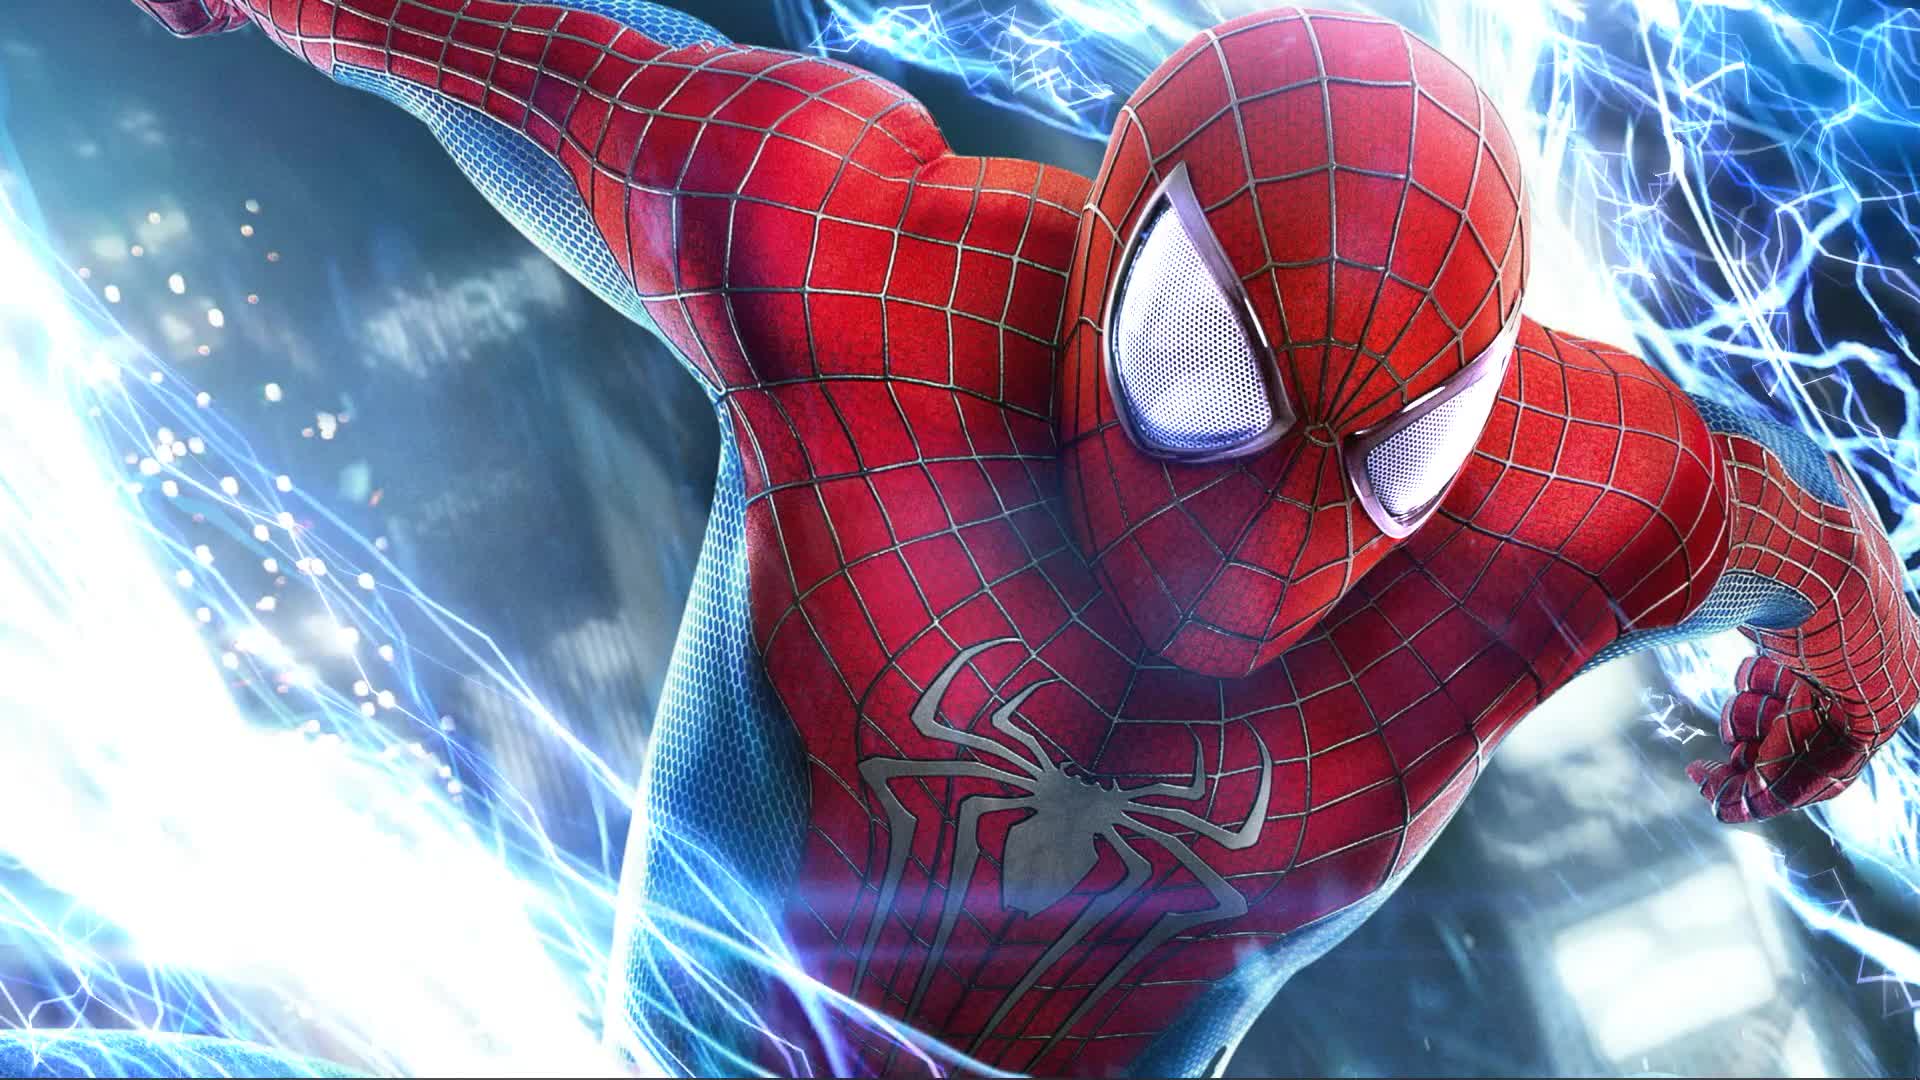 Spider-man Sleeve Cartoon Live Wallpaper - free download